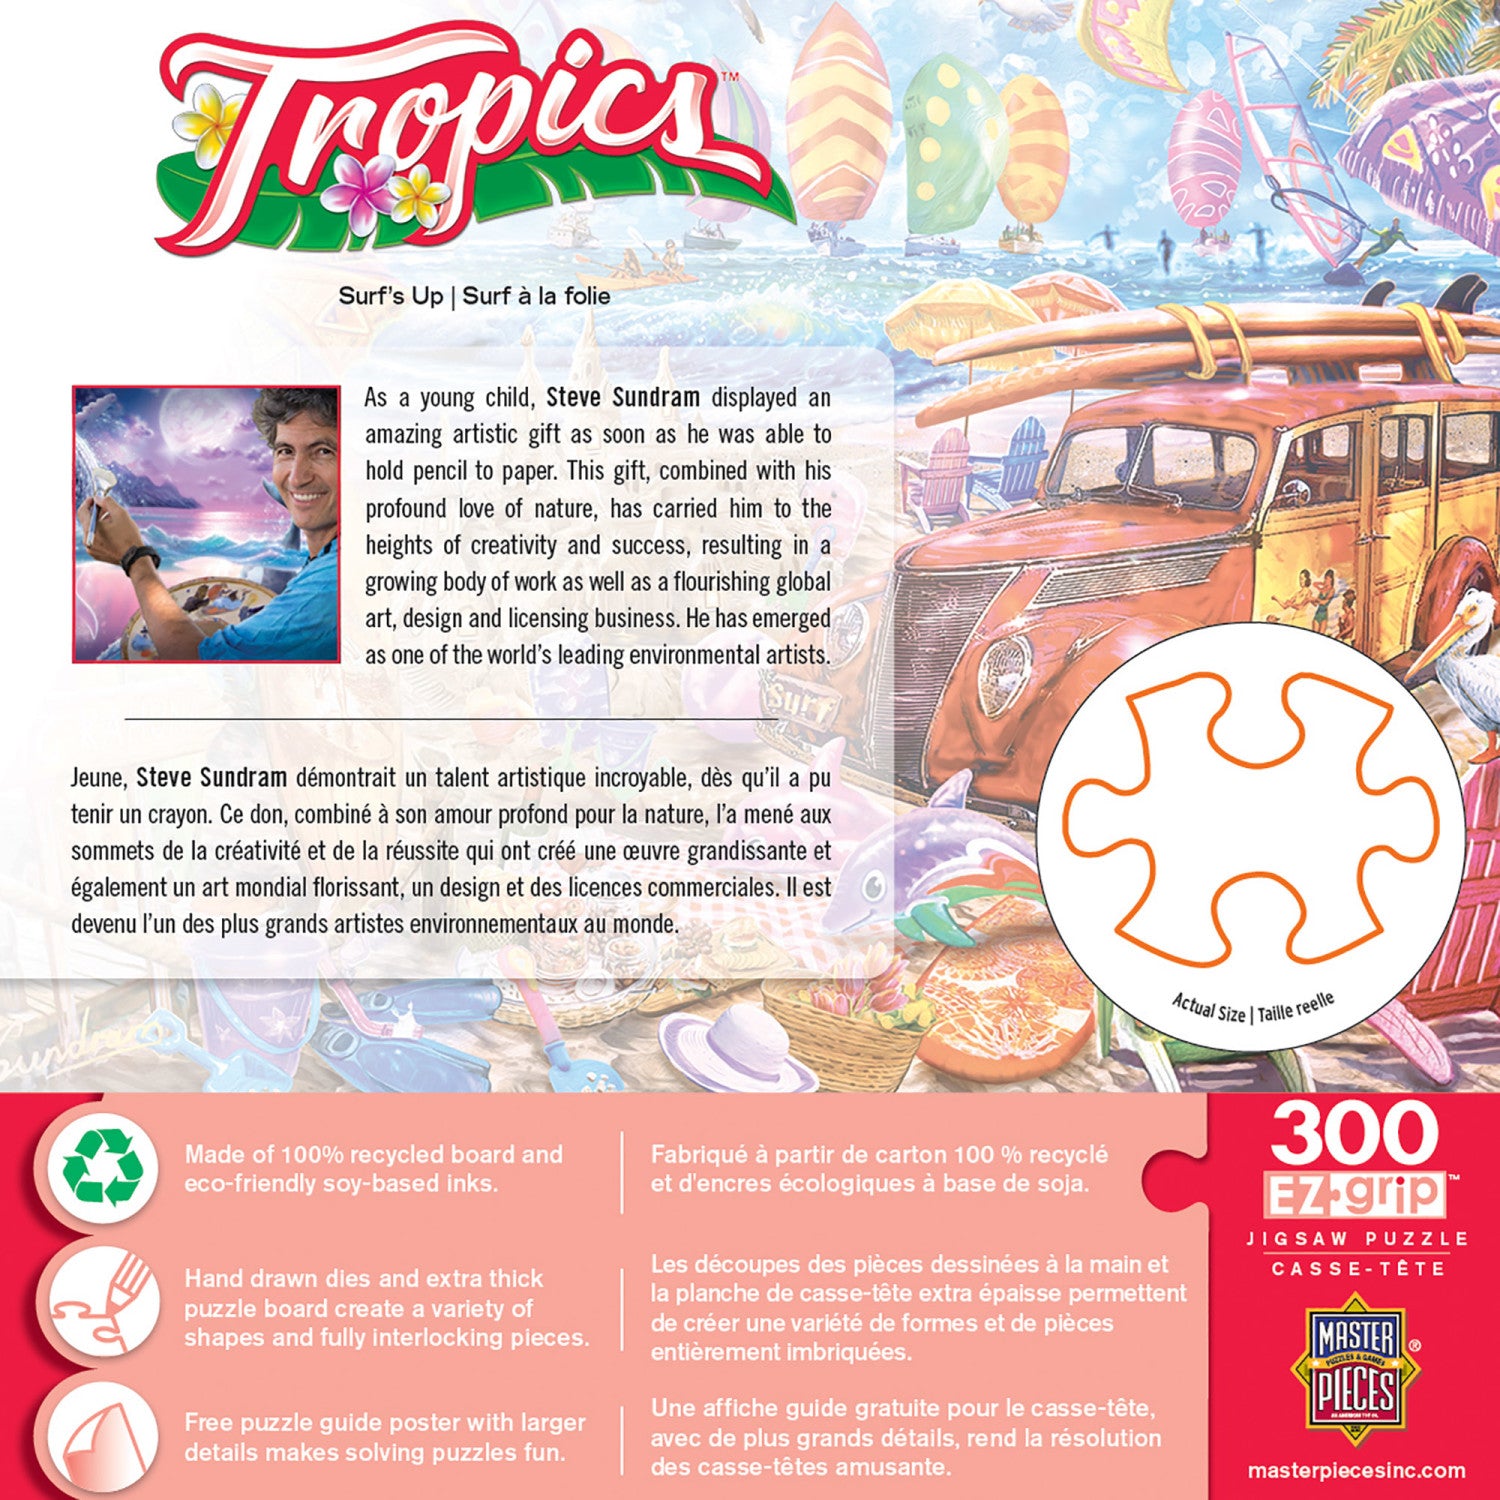 Tropics - Surf's Up 300 Piece EZ Grip Jigsaw Puzzle